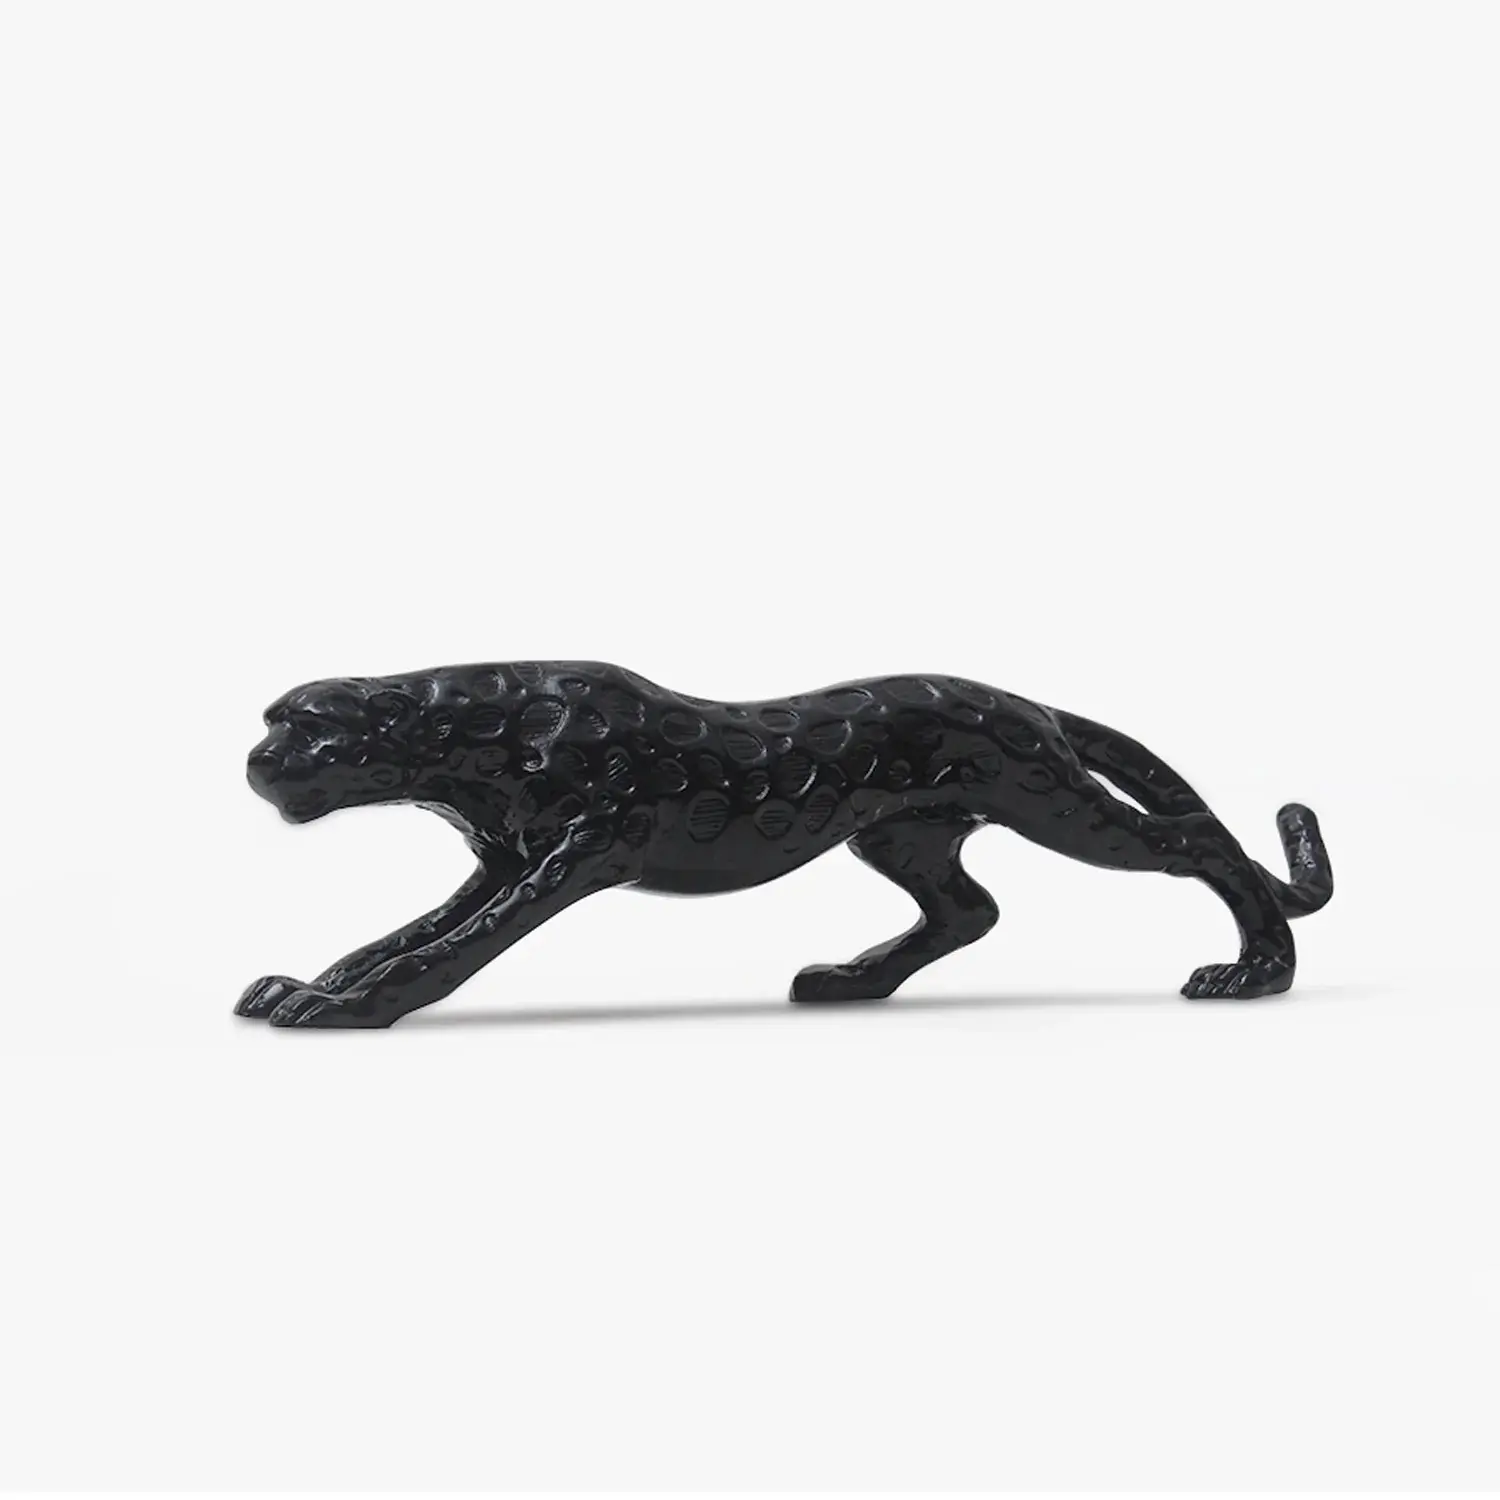 Escultura de Jaguar hecha a mano de resina de alta calidad, escultura de resina personalizada elegante para el hogar, oficina, decoración de mesa, uso